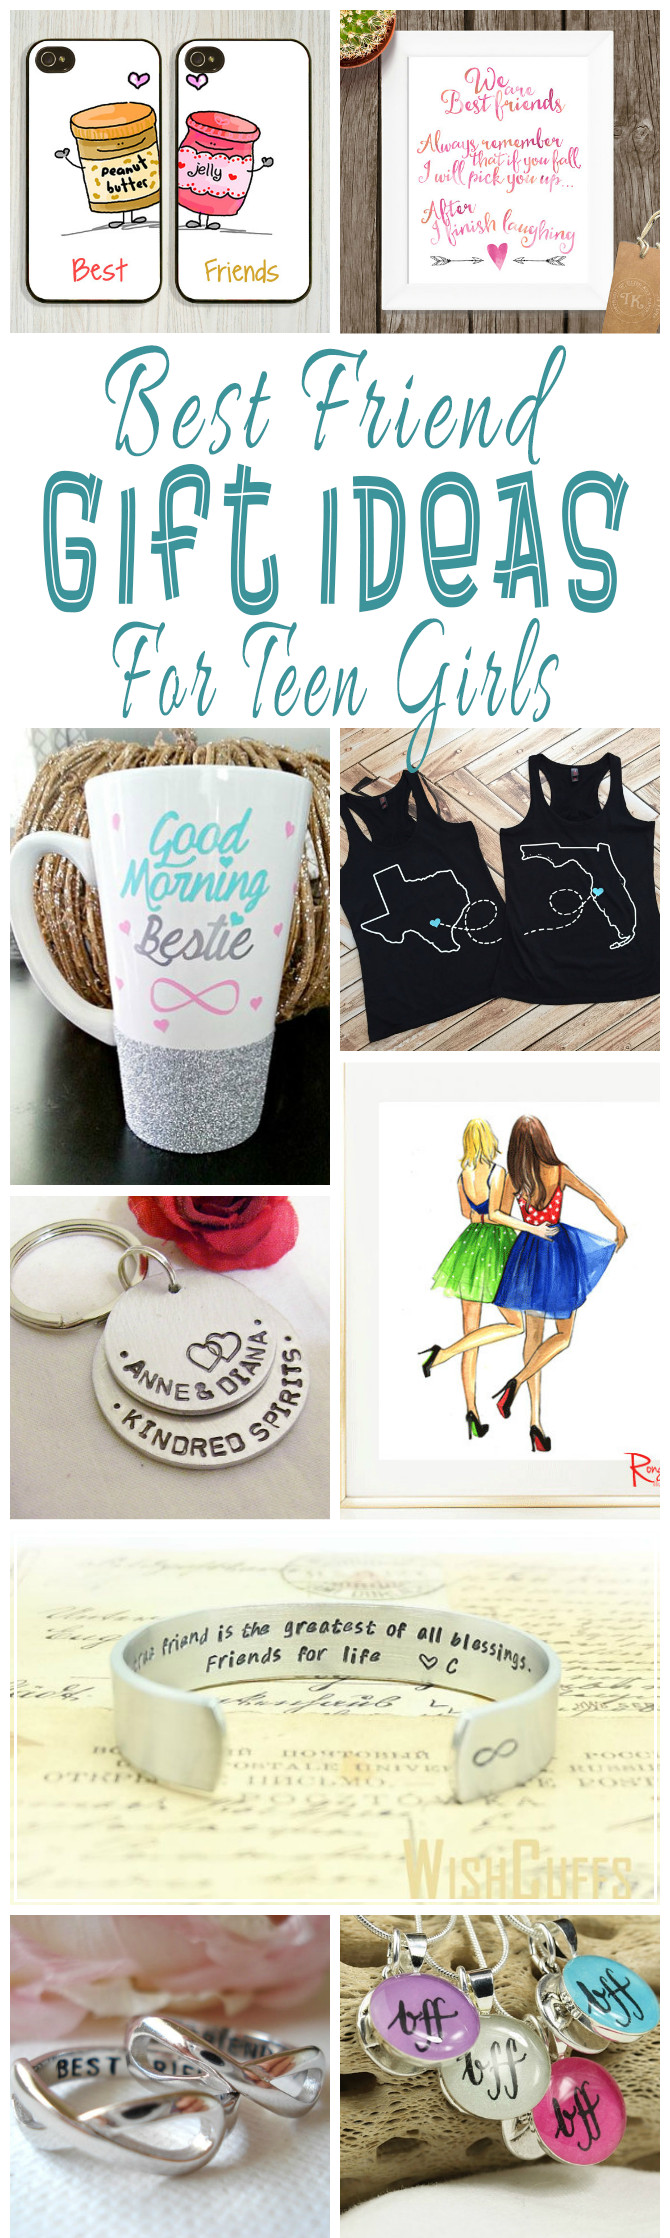 Birthday Gift Ideas For Best Friend Girl
 Best Friend Gift Ideas For Teens